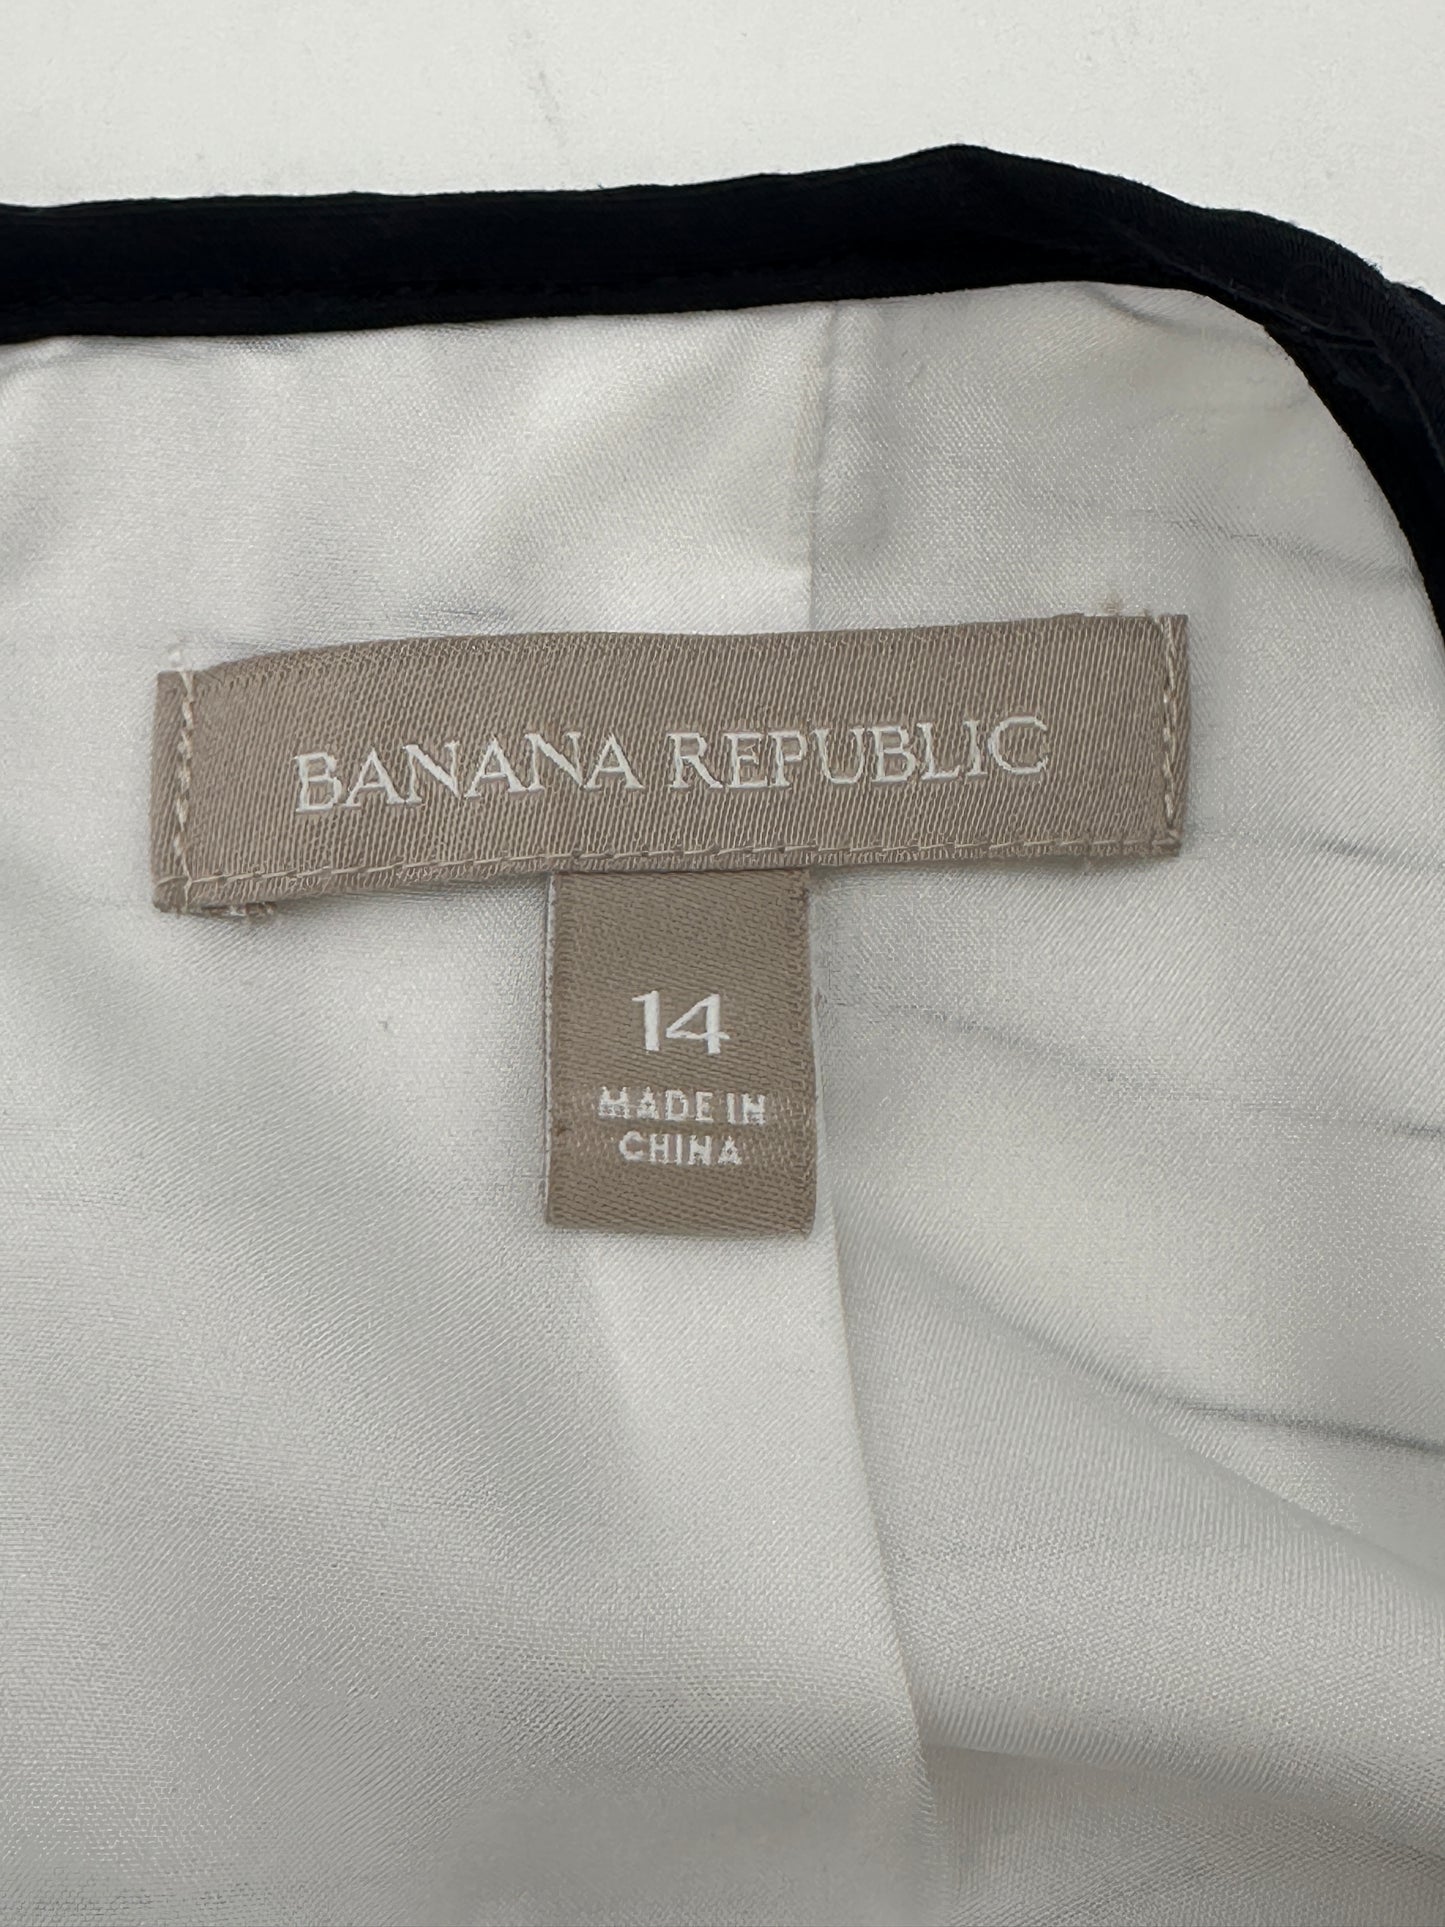 Banana Republic Size 14 White & Navy Blue Striped Sleeveless A-Line Dress